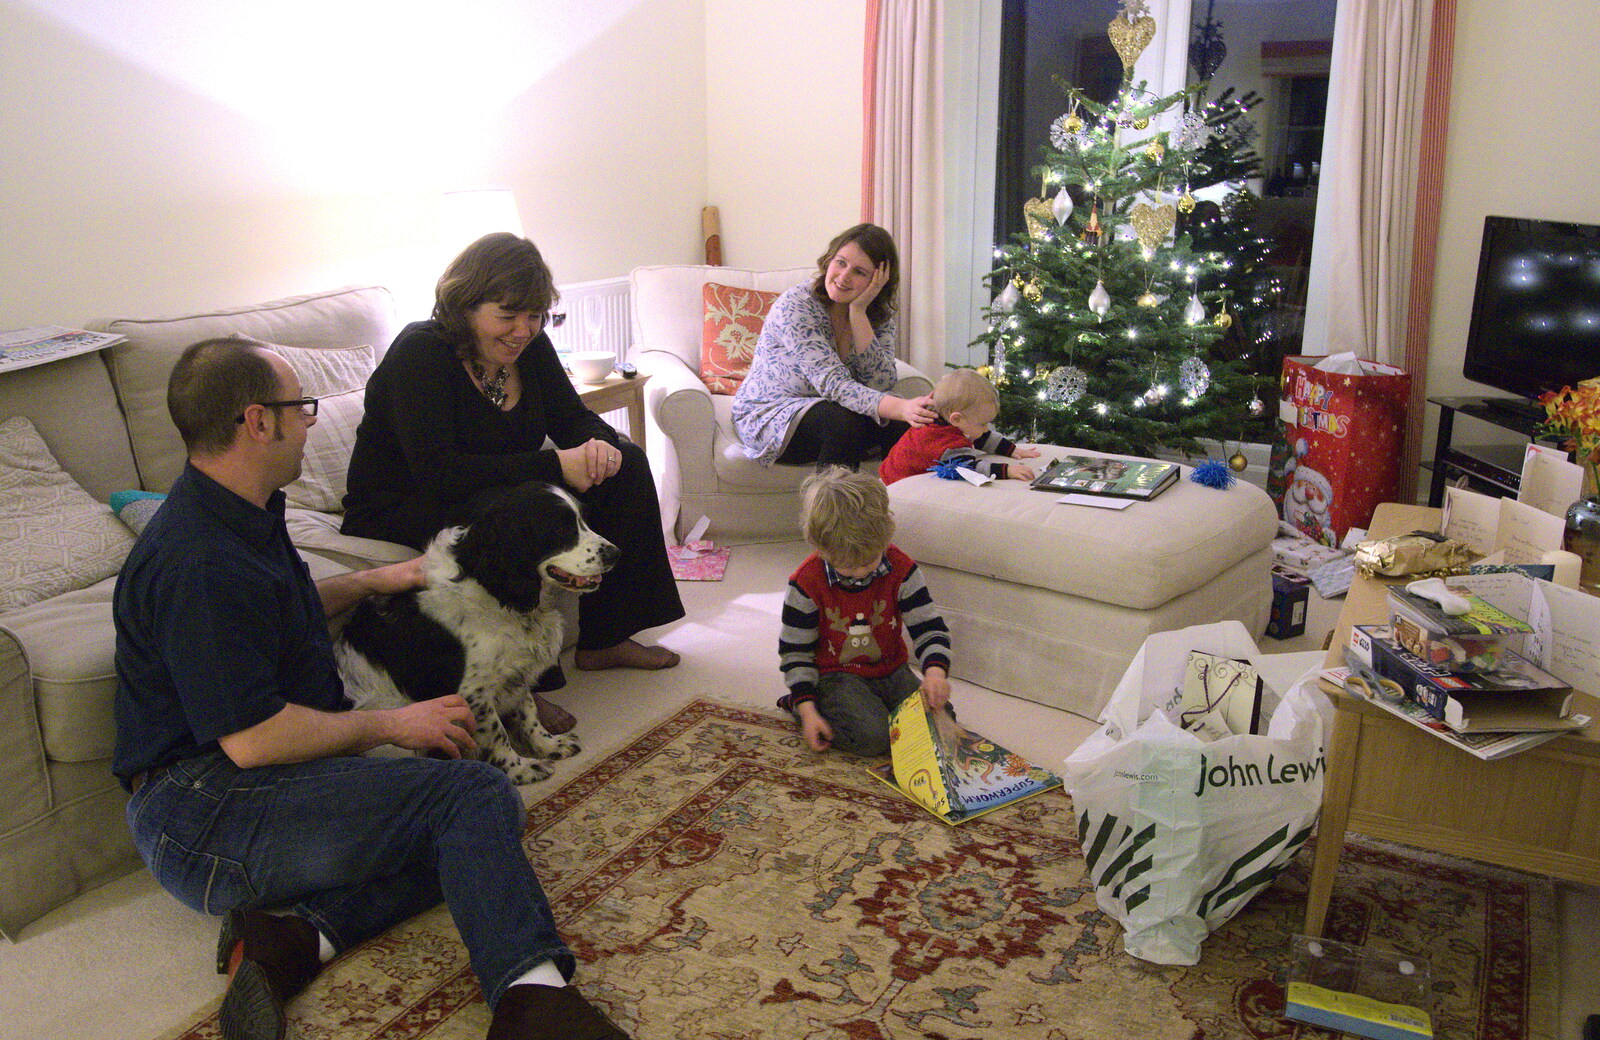 Fred's got The Gruffalo from Christmas Day in Spreyton, Devon - 25th December 2012